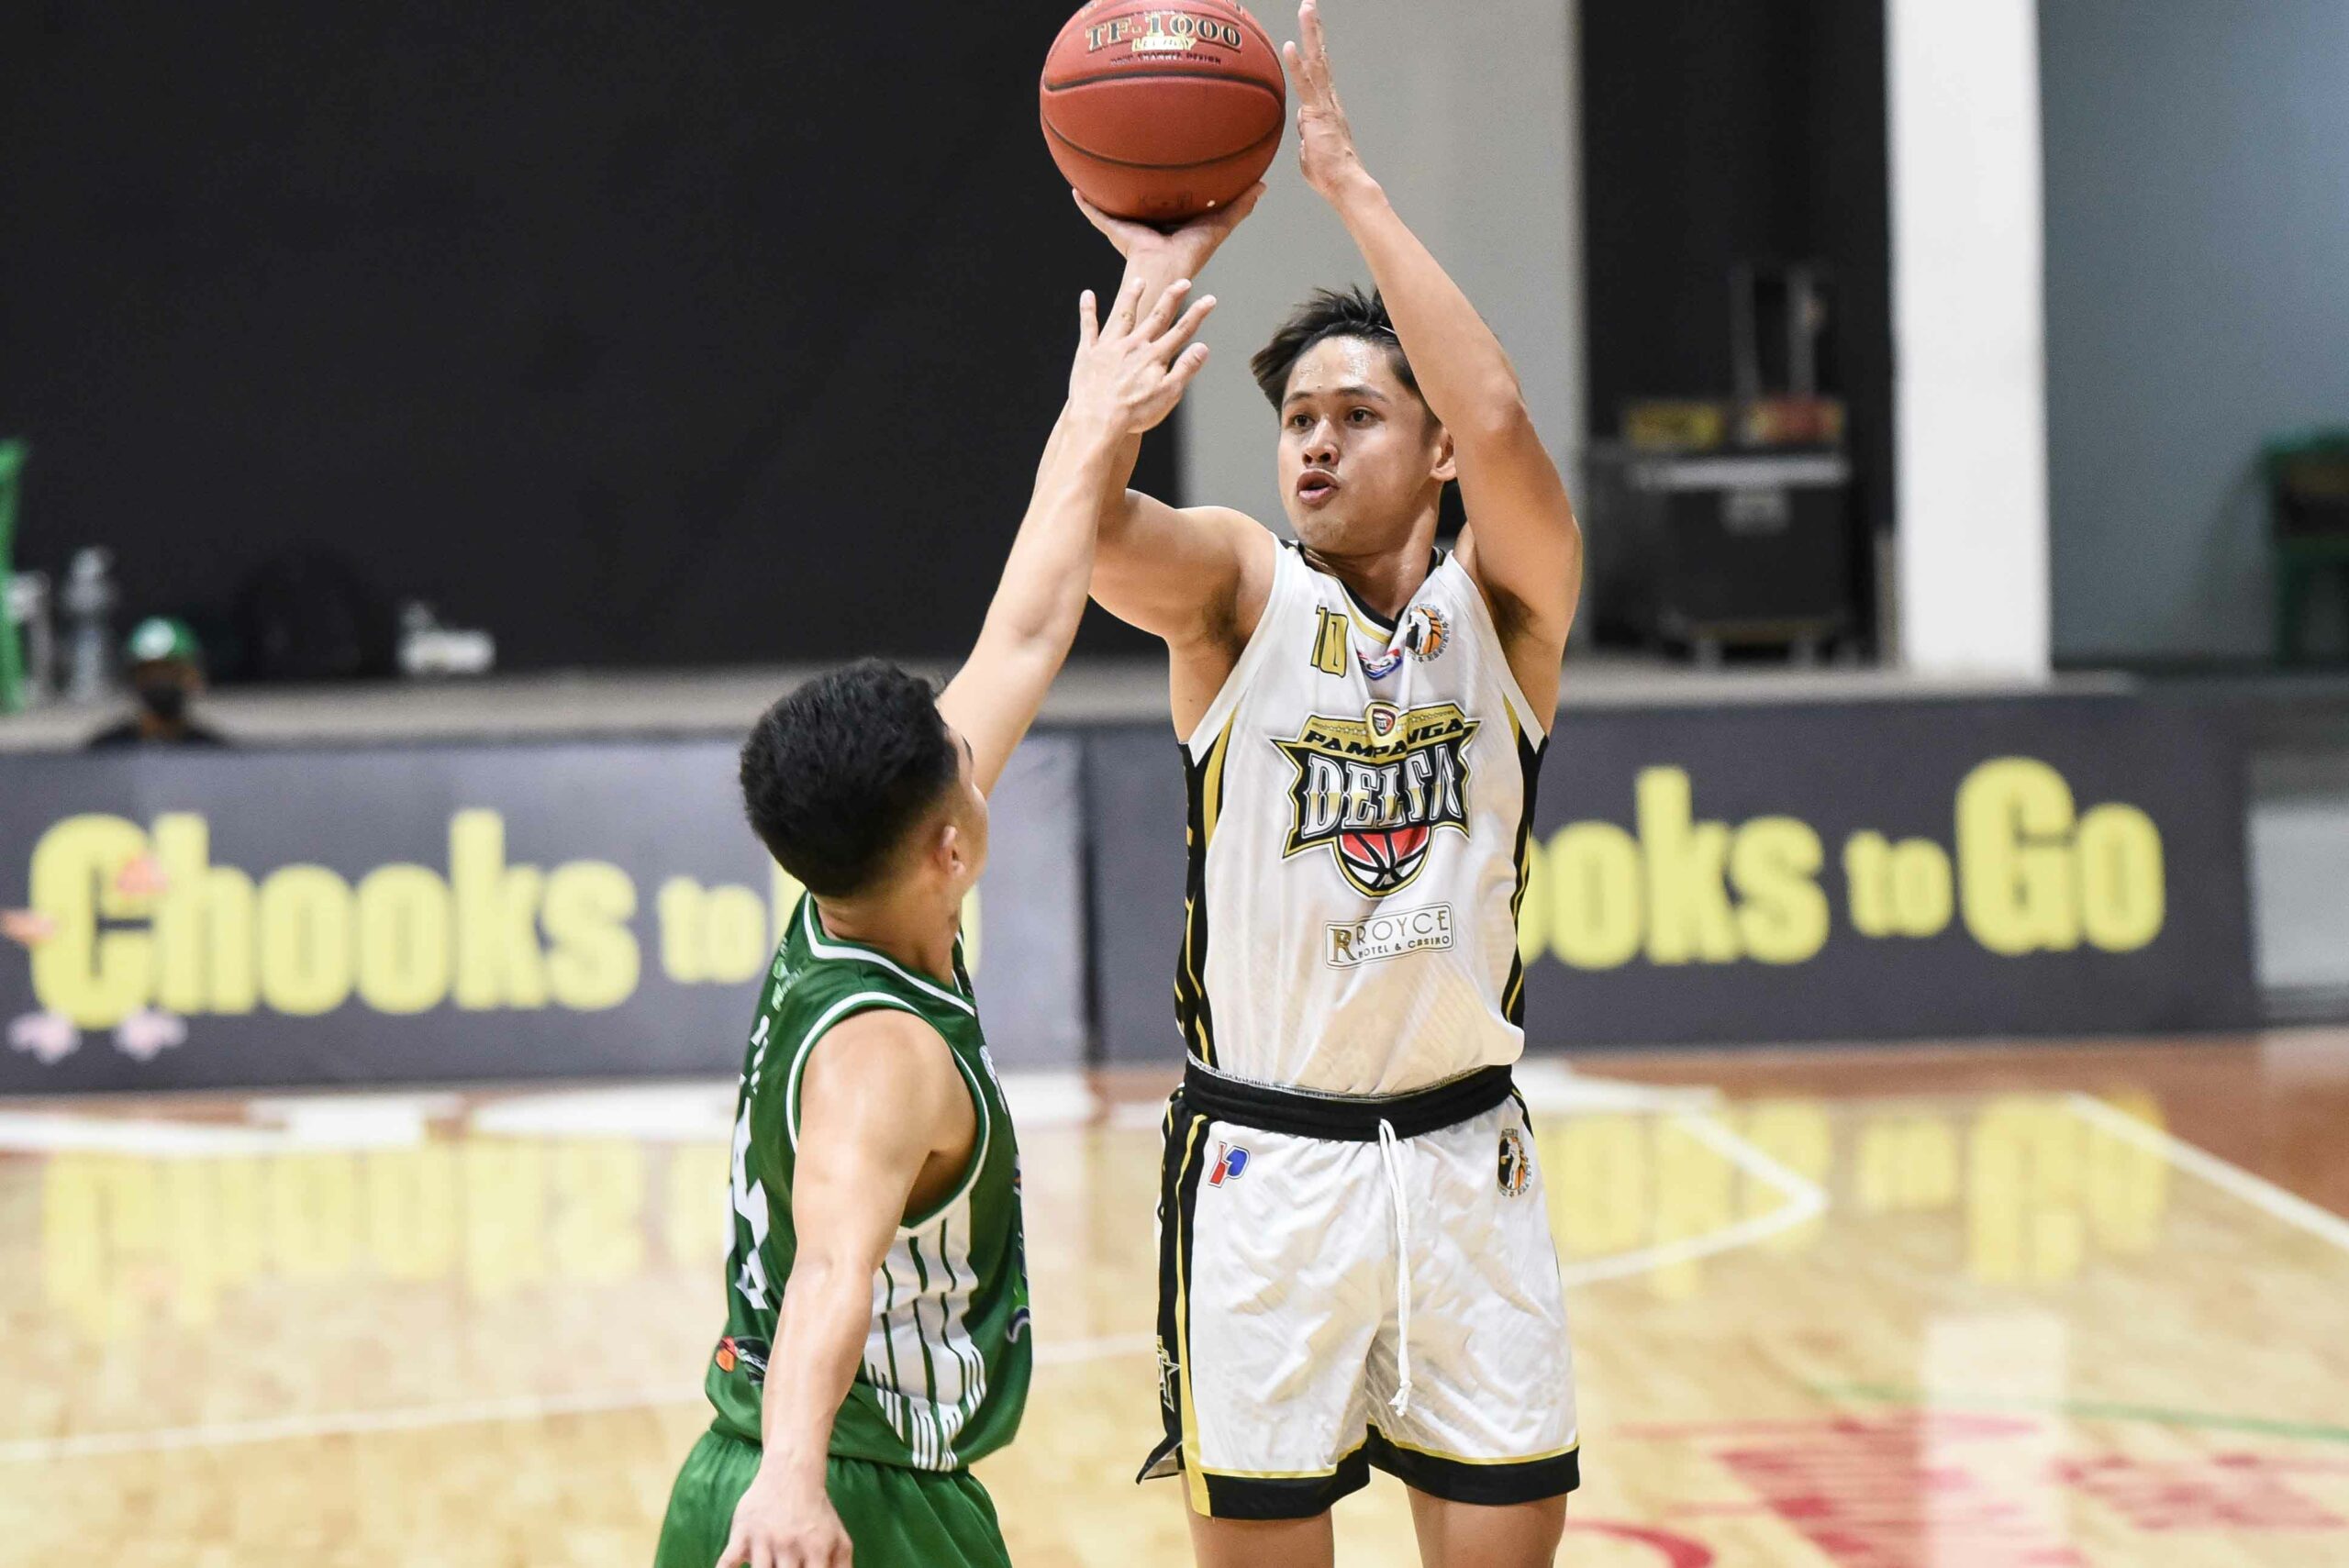 2021-Chooks-NBL-Pampanga-vs-Quezon-Jeffrey-Santos-Pampanga-scaled Pampanga show full force, wallop Quezon via 50-point rout in NBL Basketball NBL News  - philippine sports news